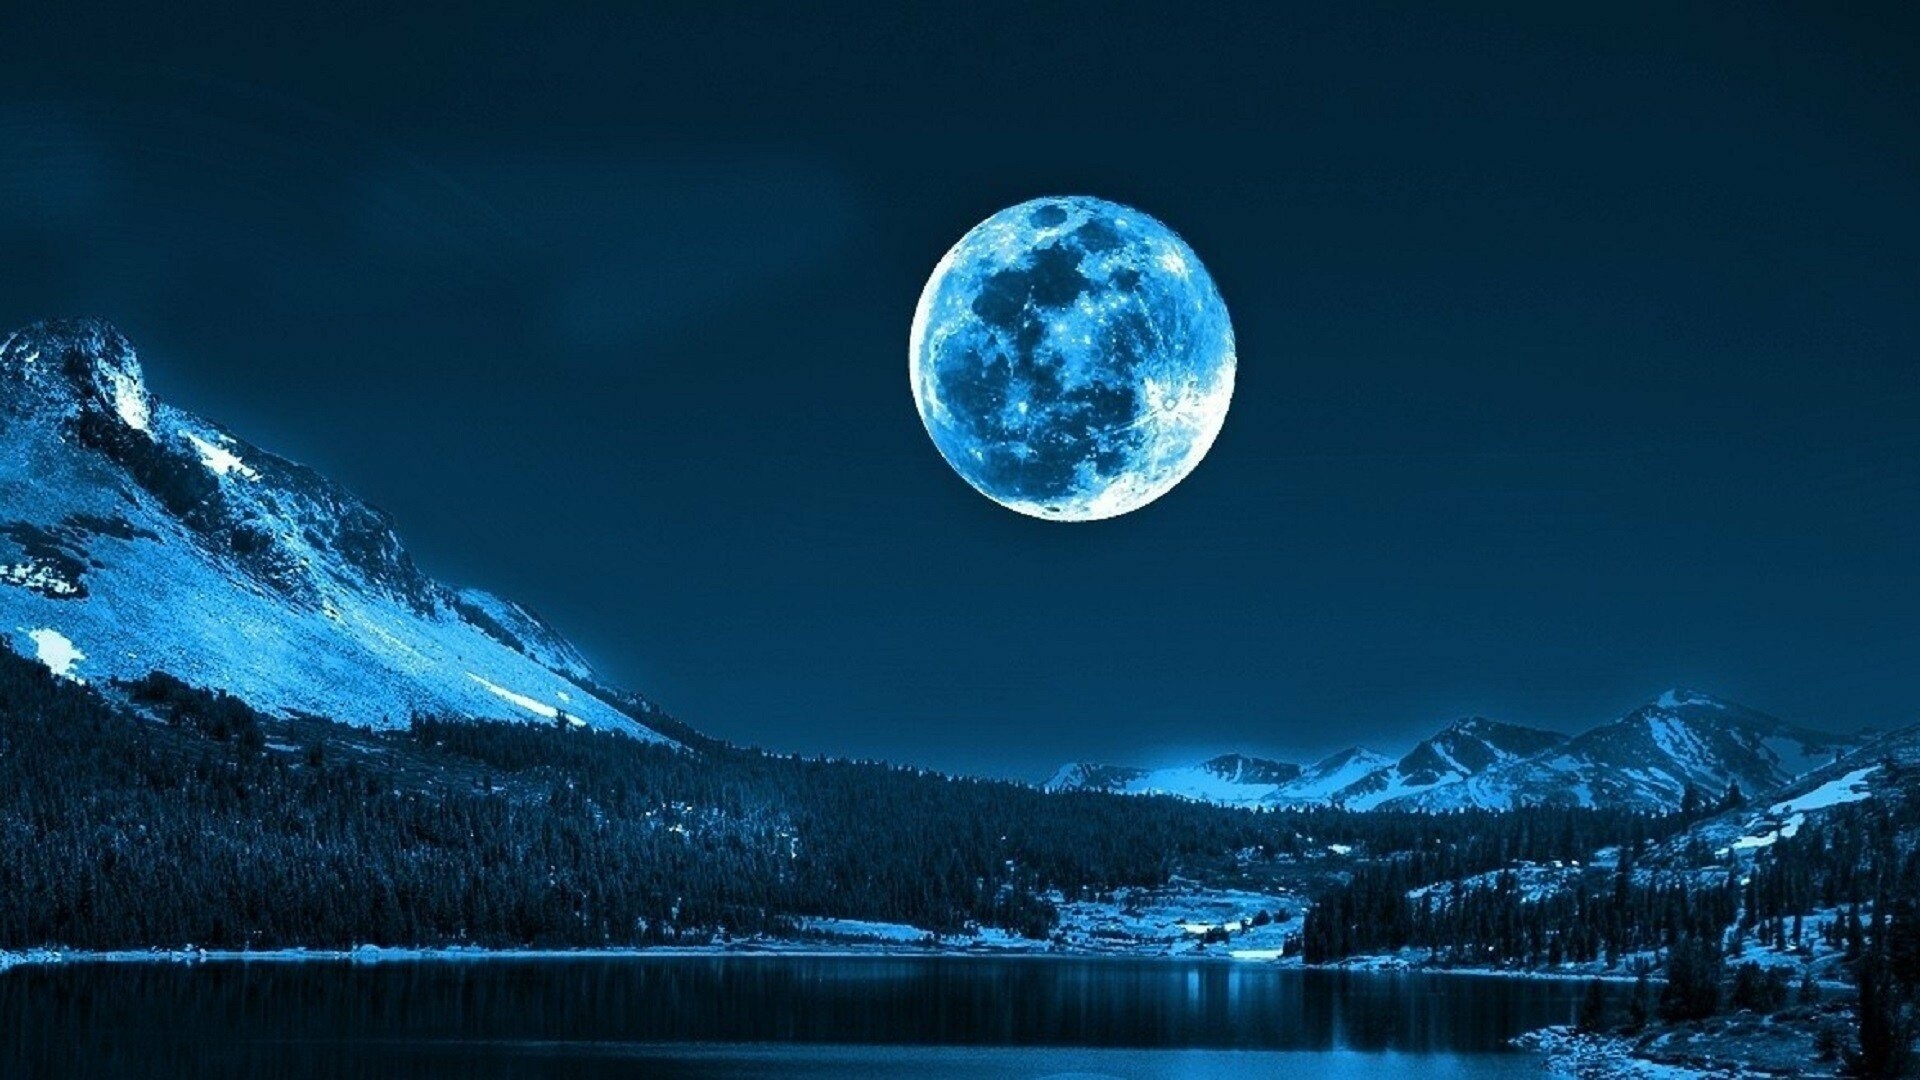 Moonlight: Darkening skies, The broad expanse of water reflecting the moon, Atmospheric phenomena. 1920x1080 Full HD Background.